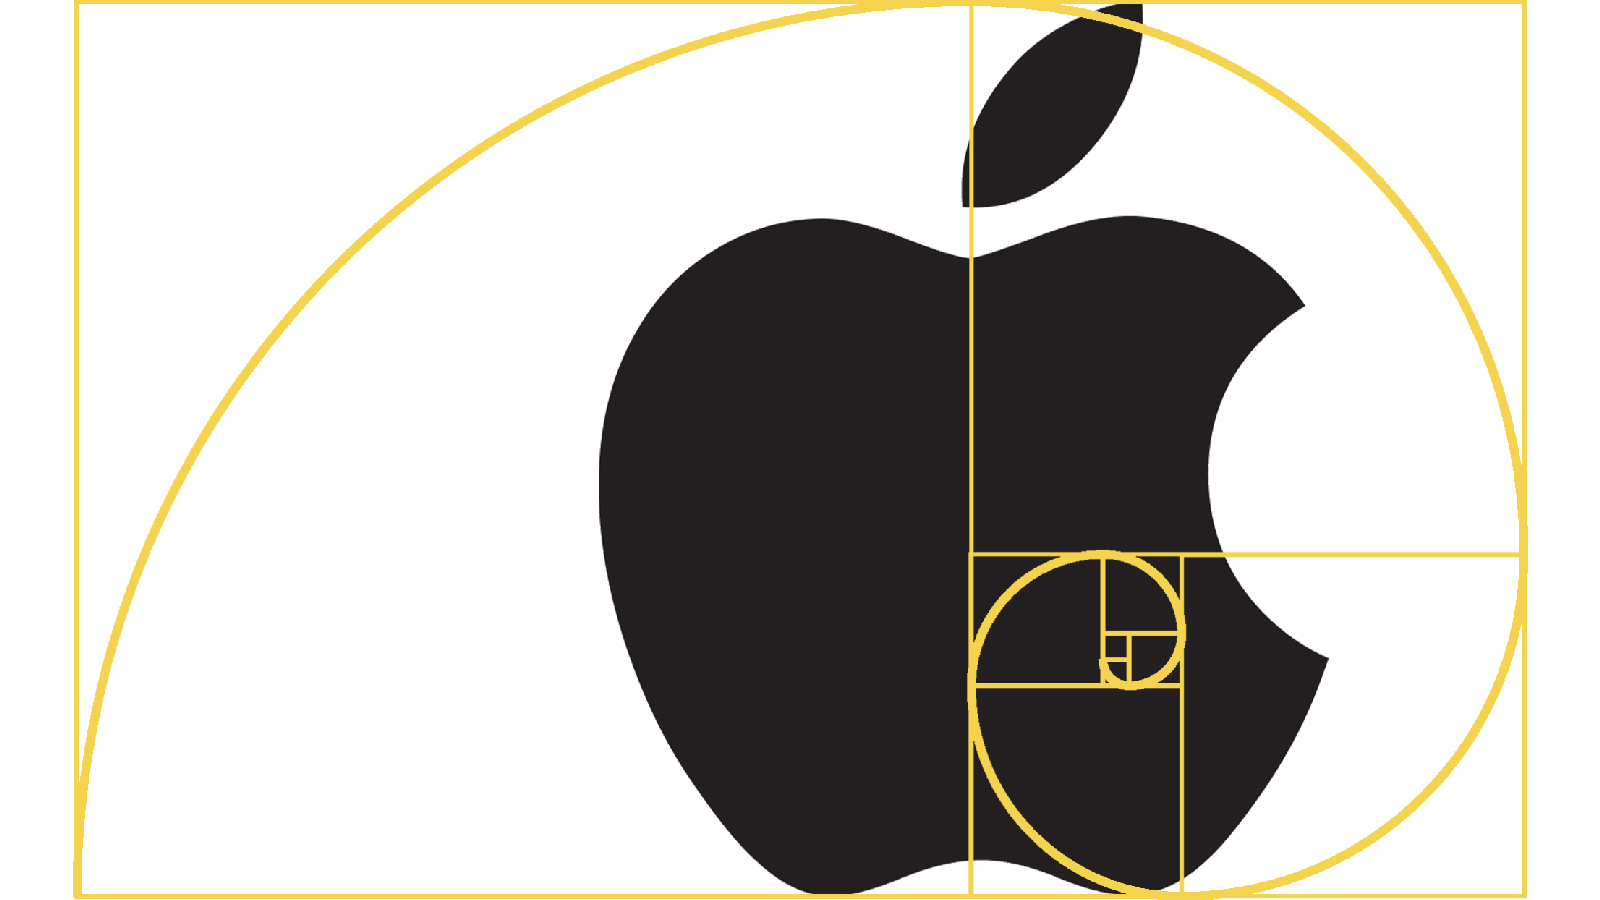 Apple Logo With Golden Ratio - HD Wallpaper 